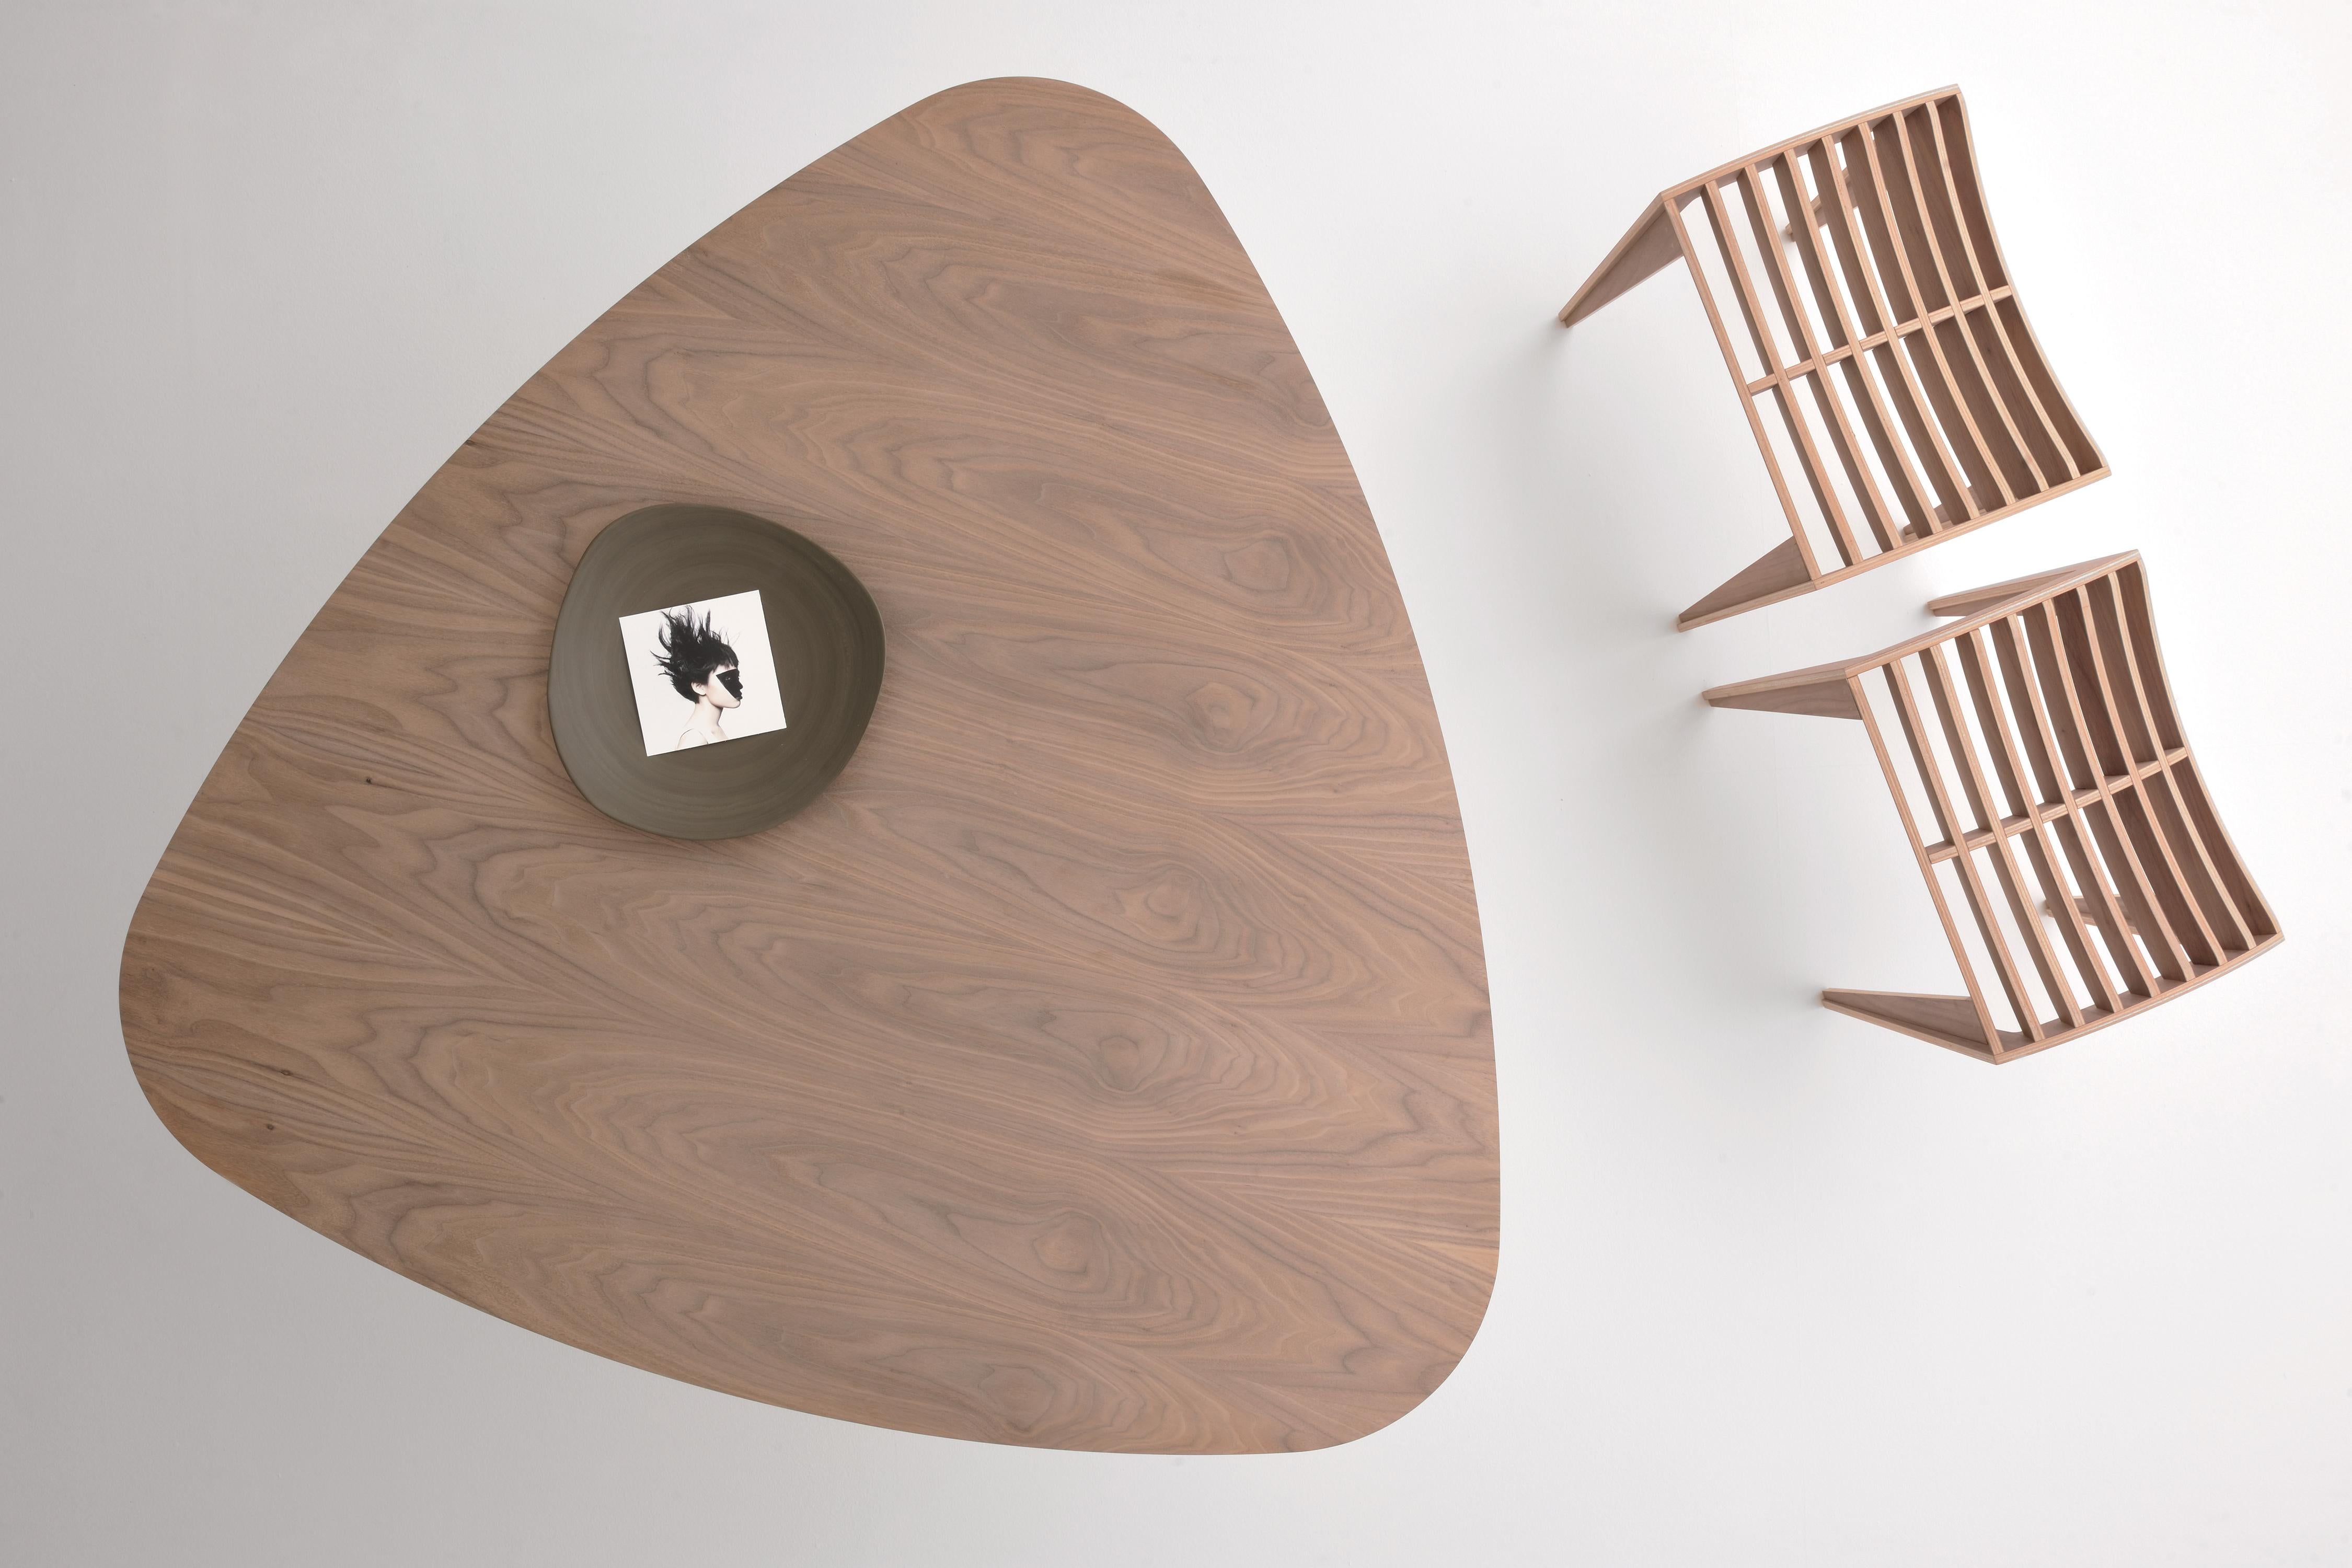 Turned Zero, Stool in Walnut Wood Designed by Franco Poli for Morelato